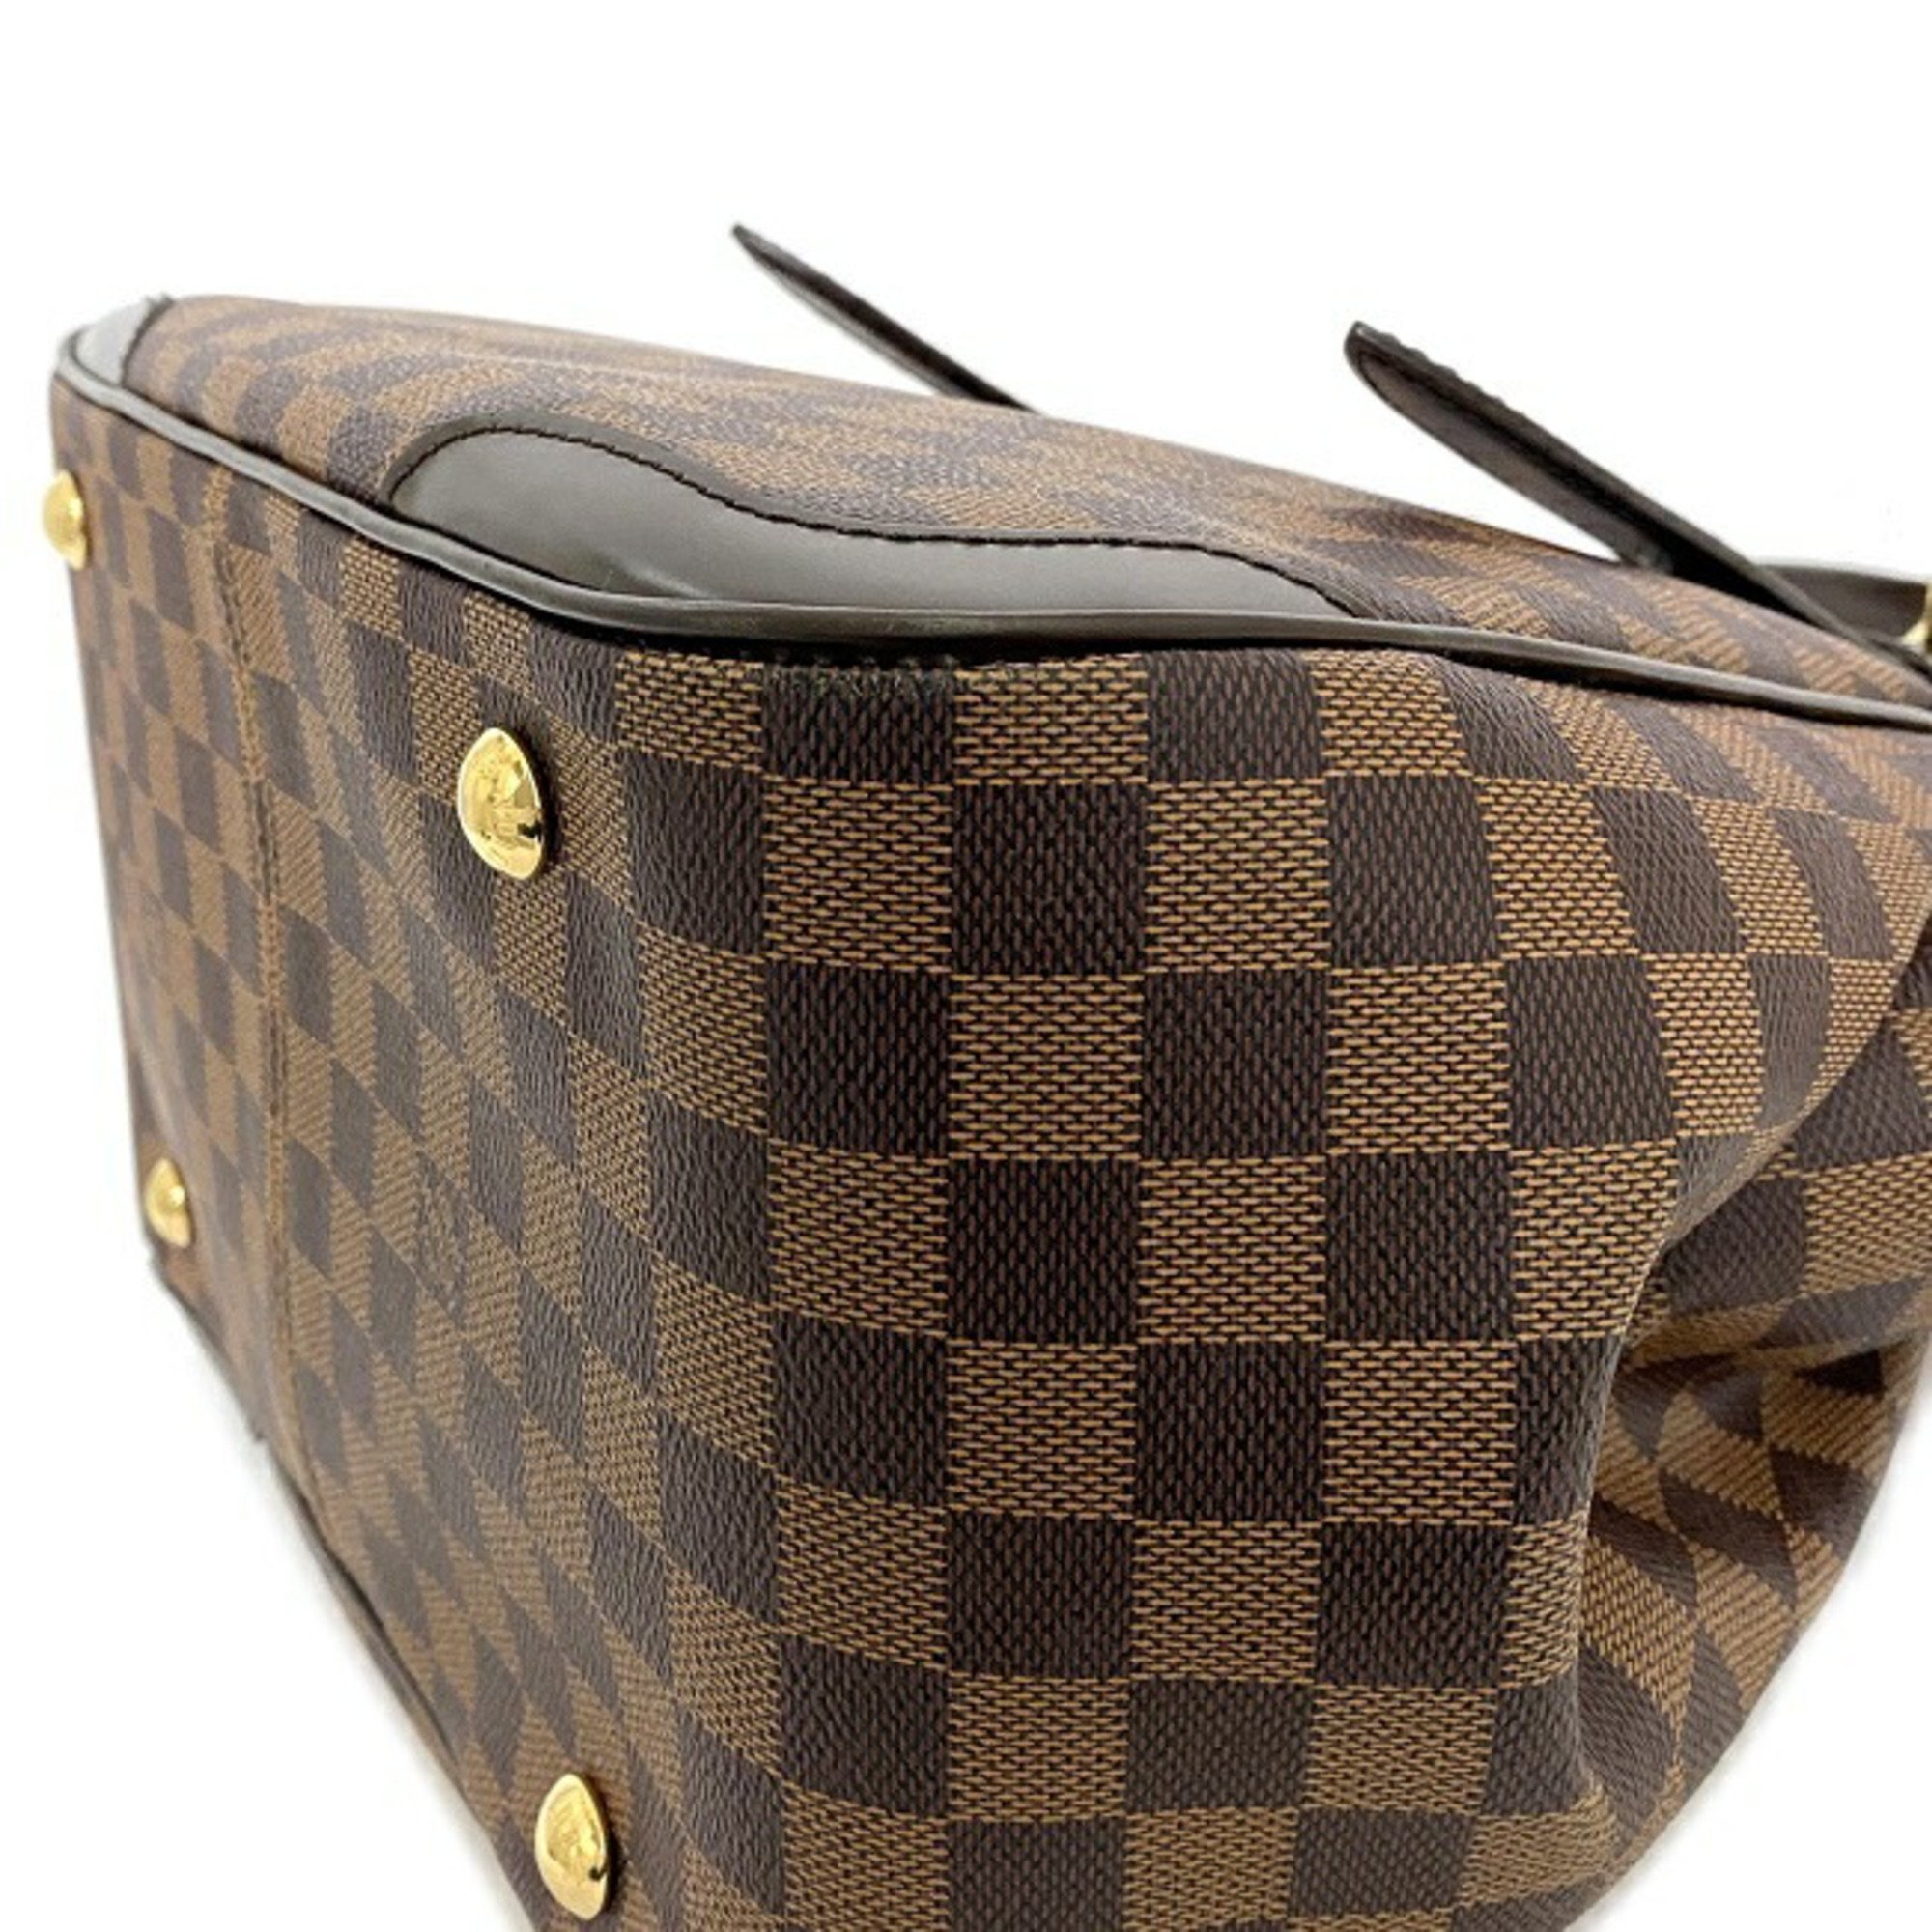 Louis Vuitton Tote Bag Verona MM Brown Gold Damier Ebene N41118 DU3170 LOUIS VUITTON Handbag Women's LV